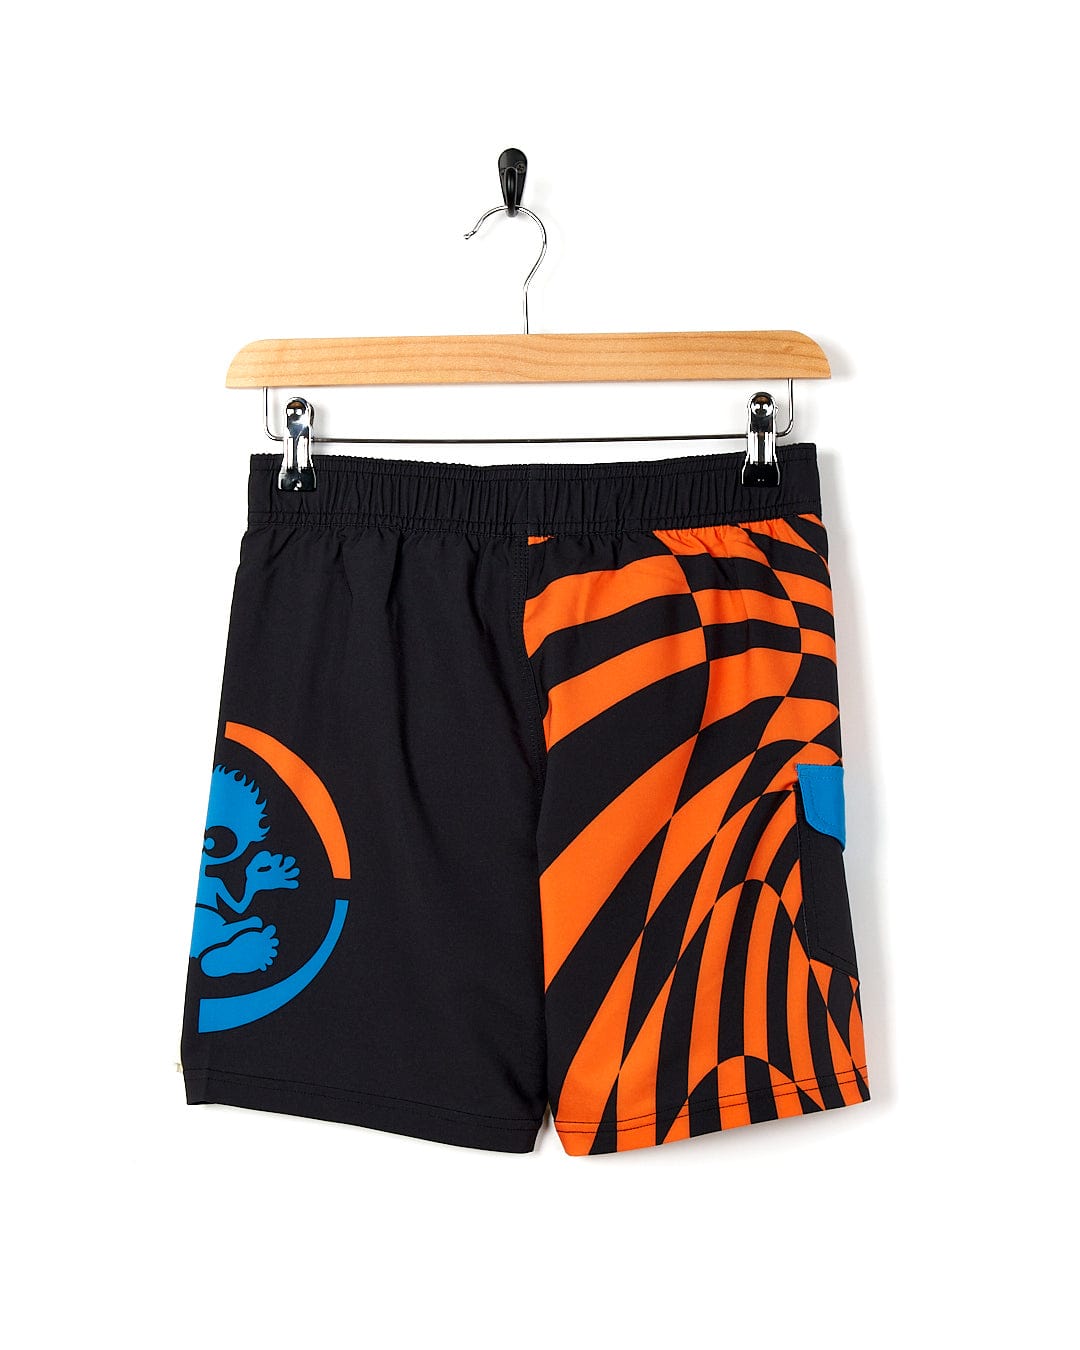 A Saltrock black and orange swim short with an orange and blue design - the Warped - Kids Boardshort - Black.